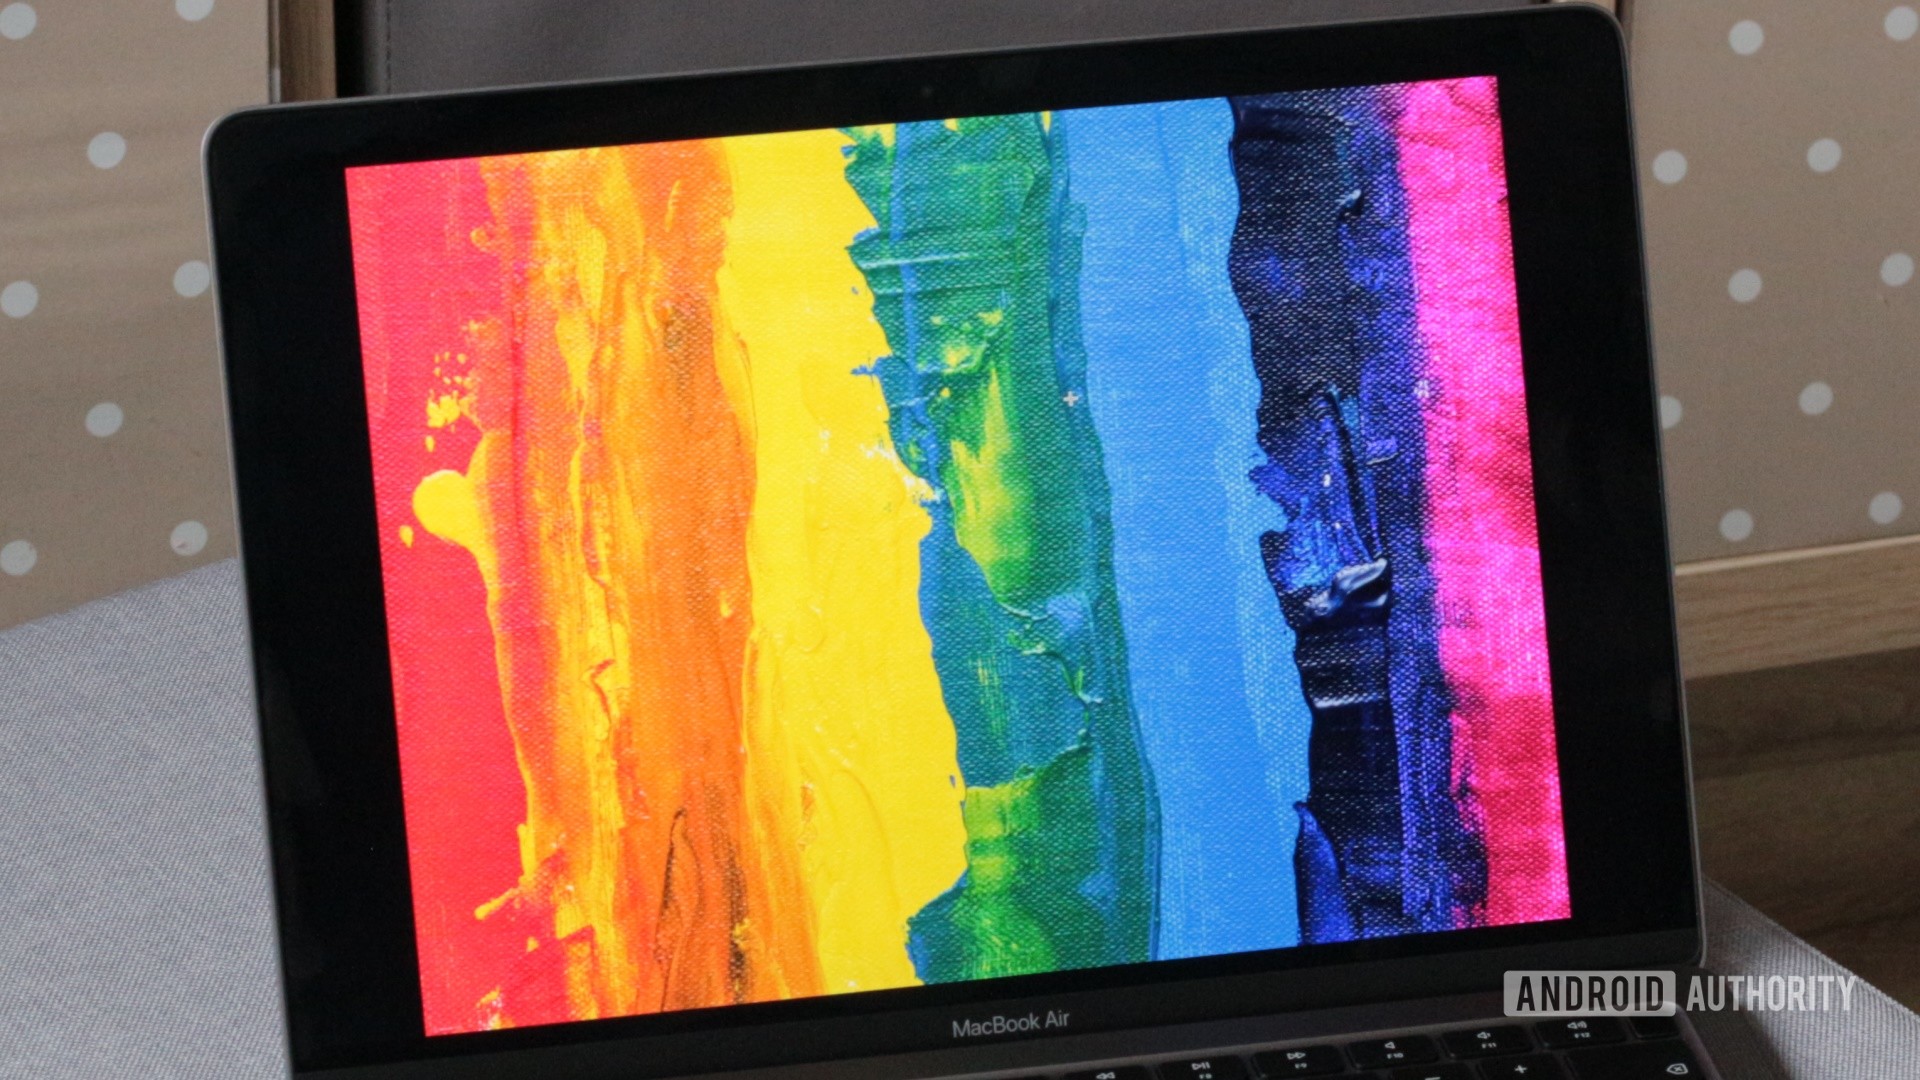 Apple MacBook Air M1 paint photo displayed on screen